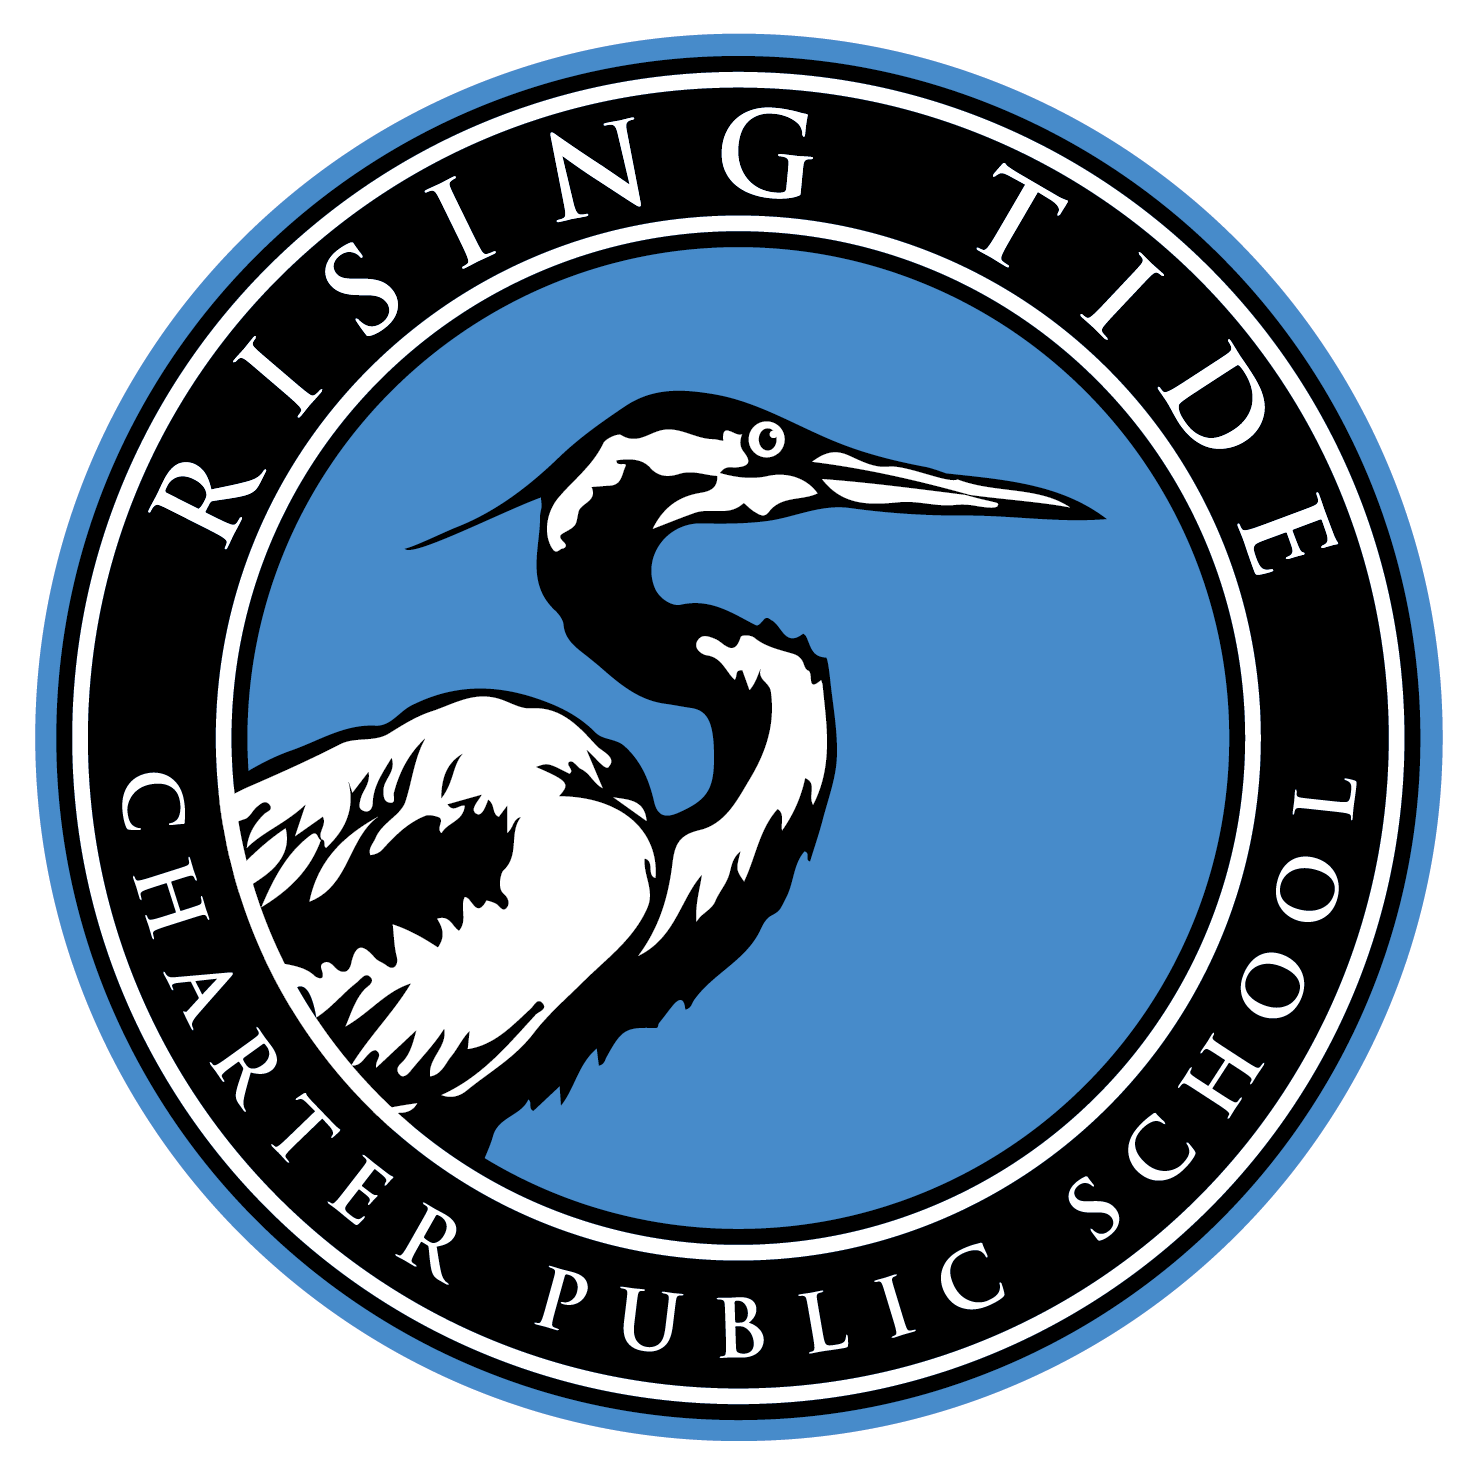 The Rising Tide - National Alumni Association